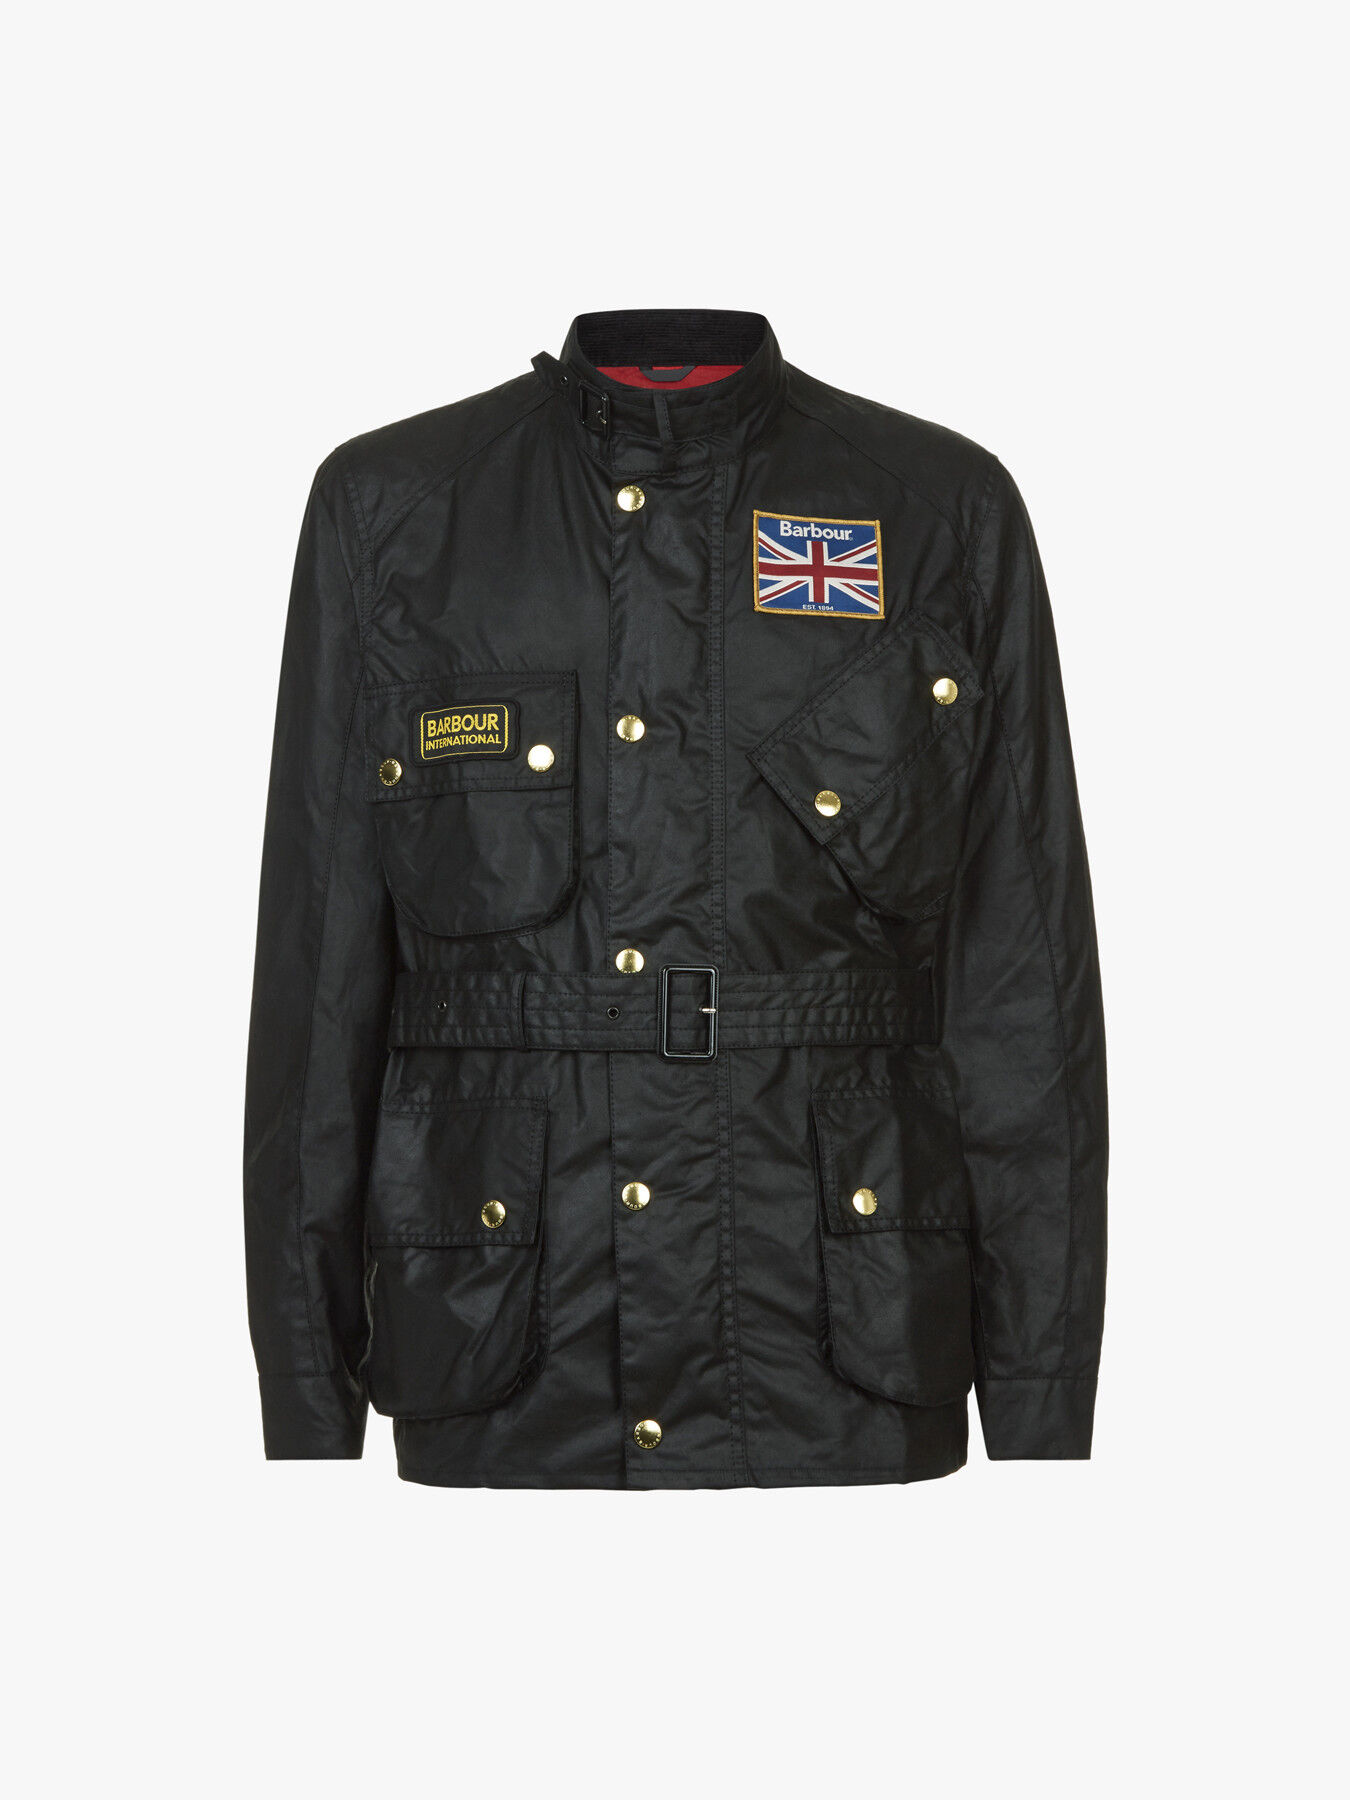 men's barbour international union jack waxed jacket